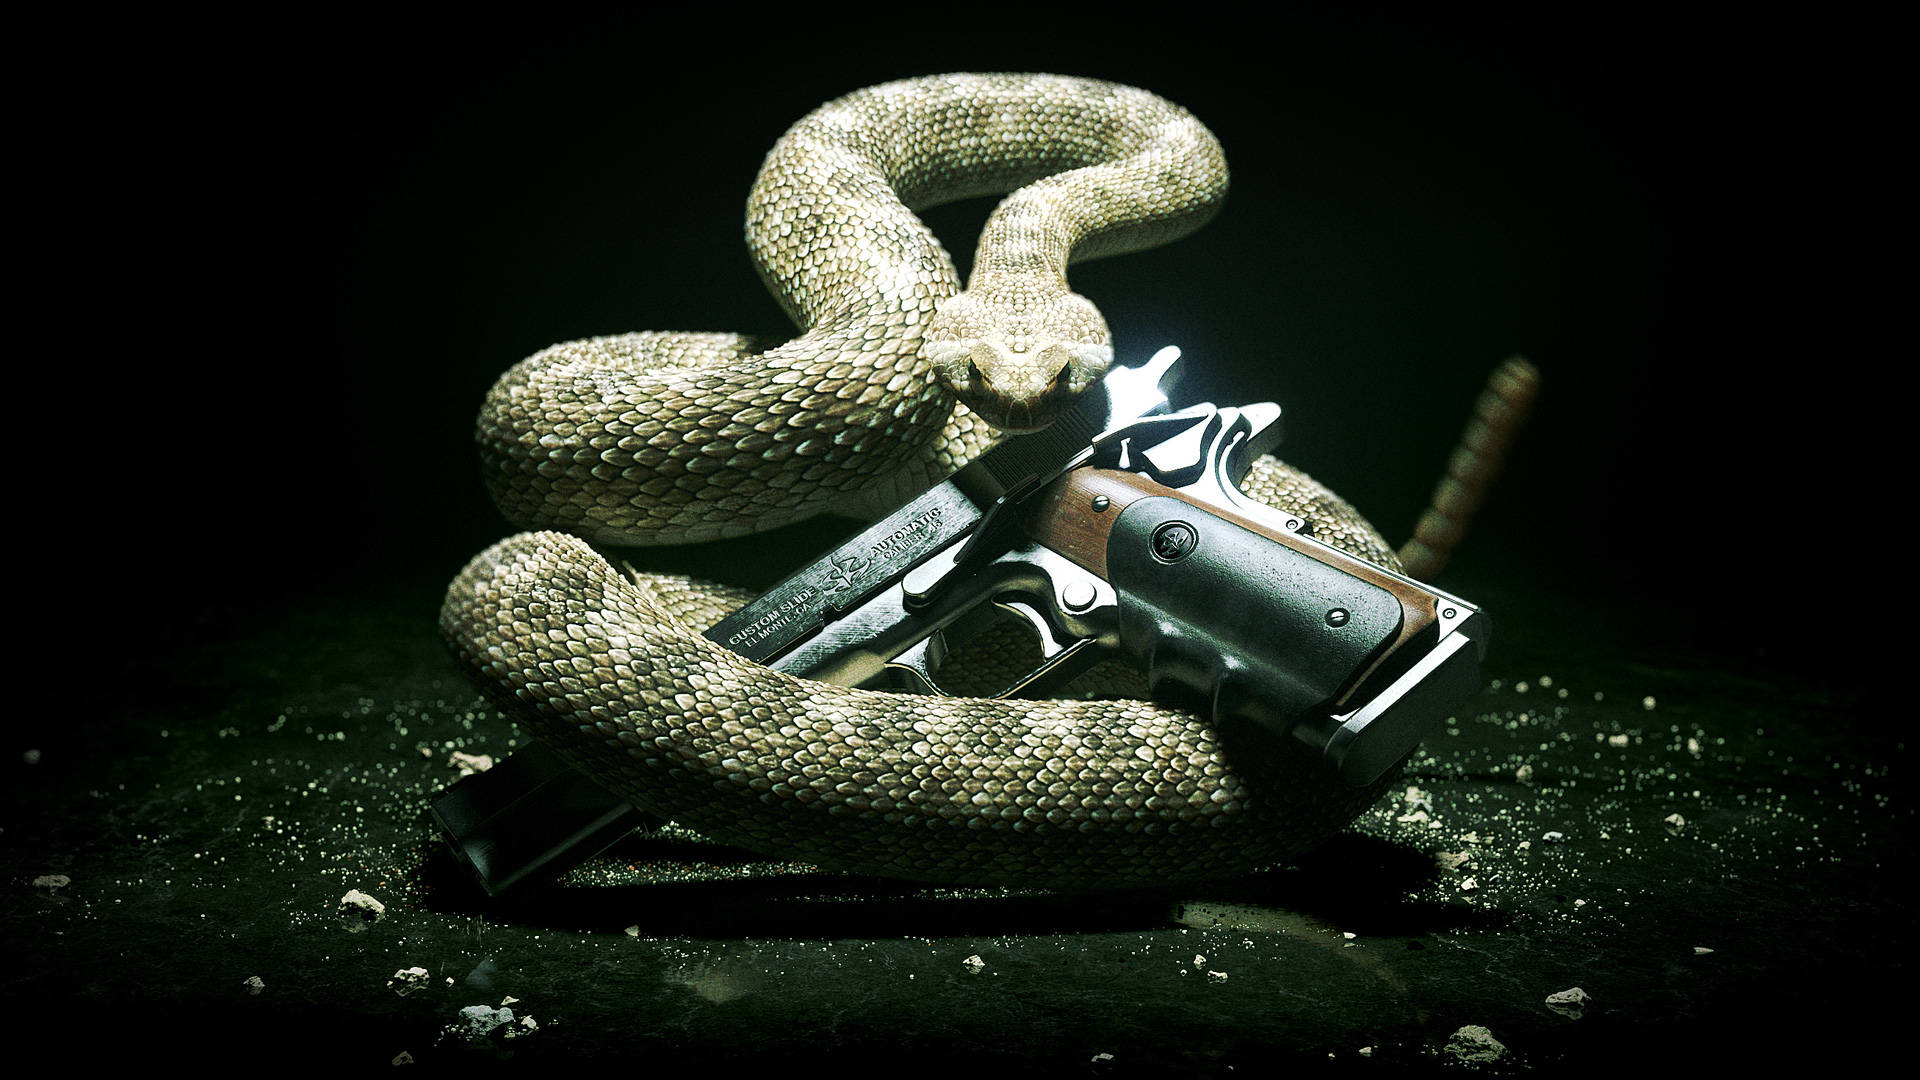 Hitman's Gun With Snake